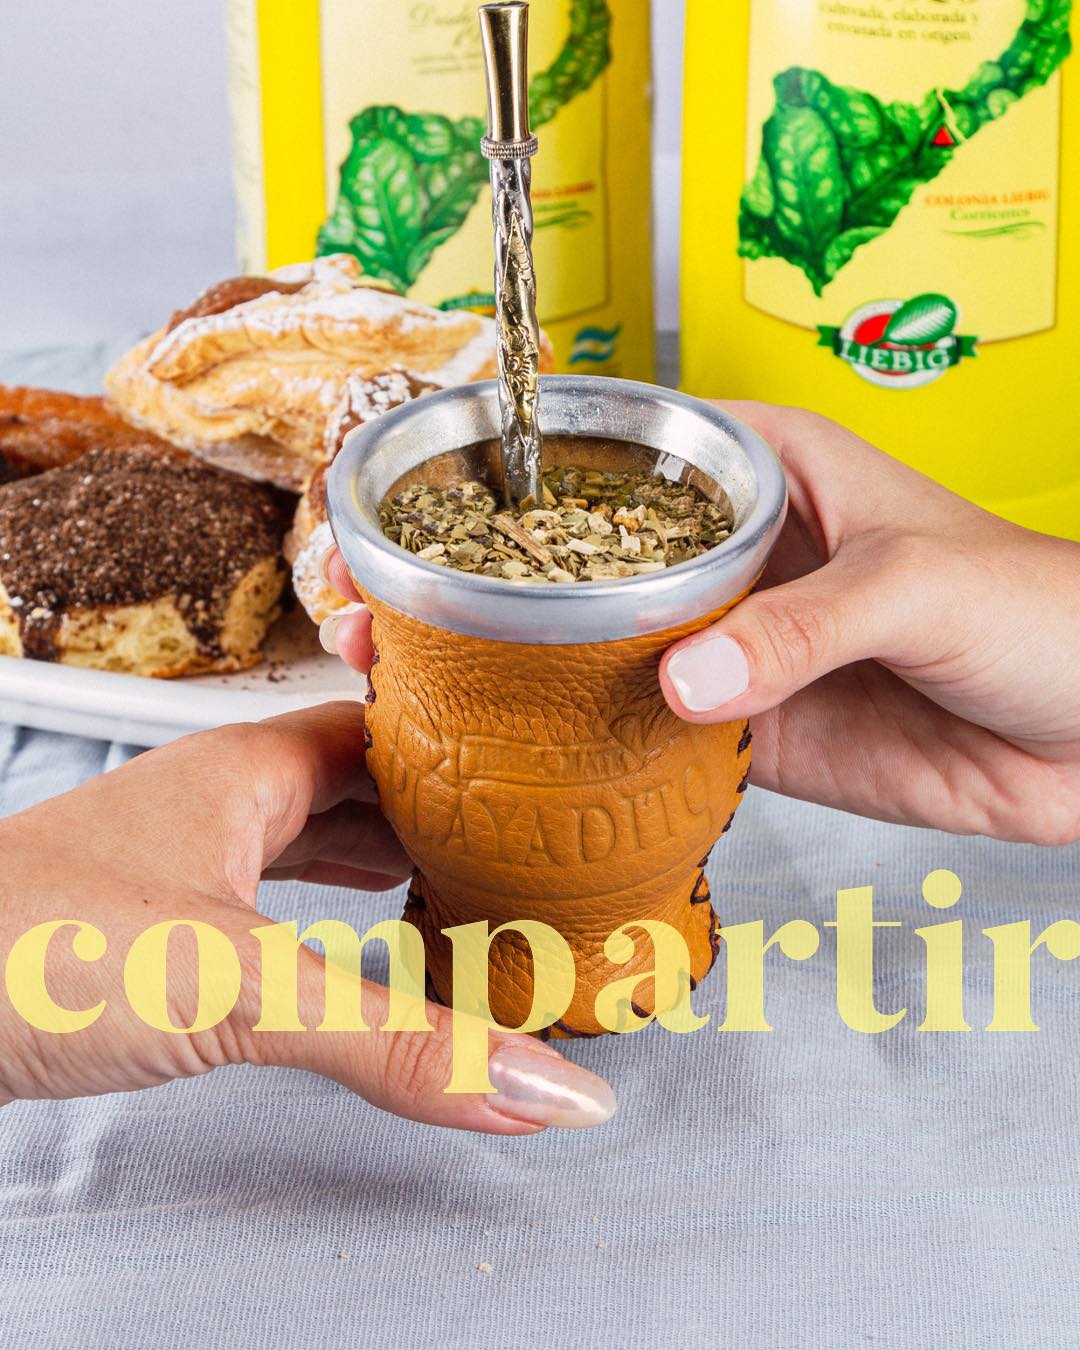 www.cooperativaliebig.com.ar  playadito yerba mate tea